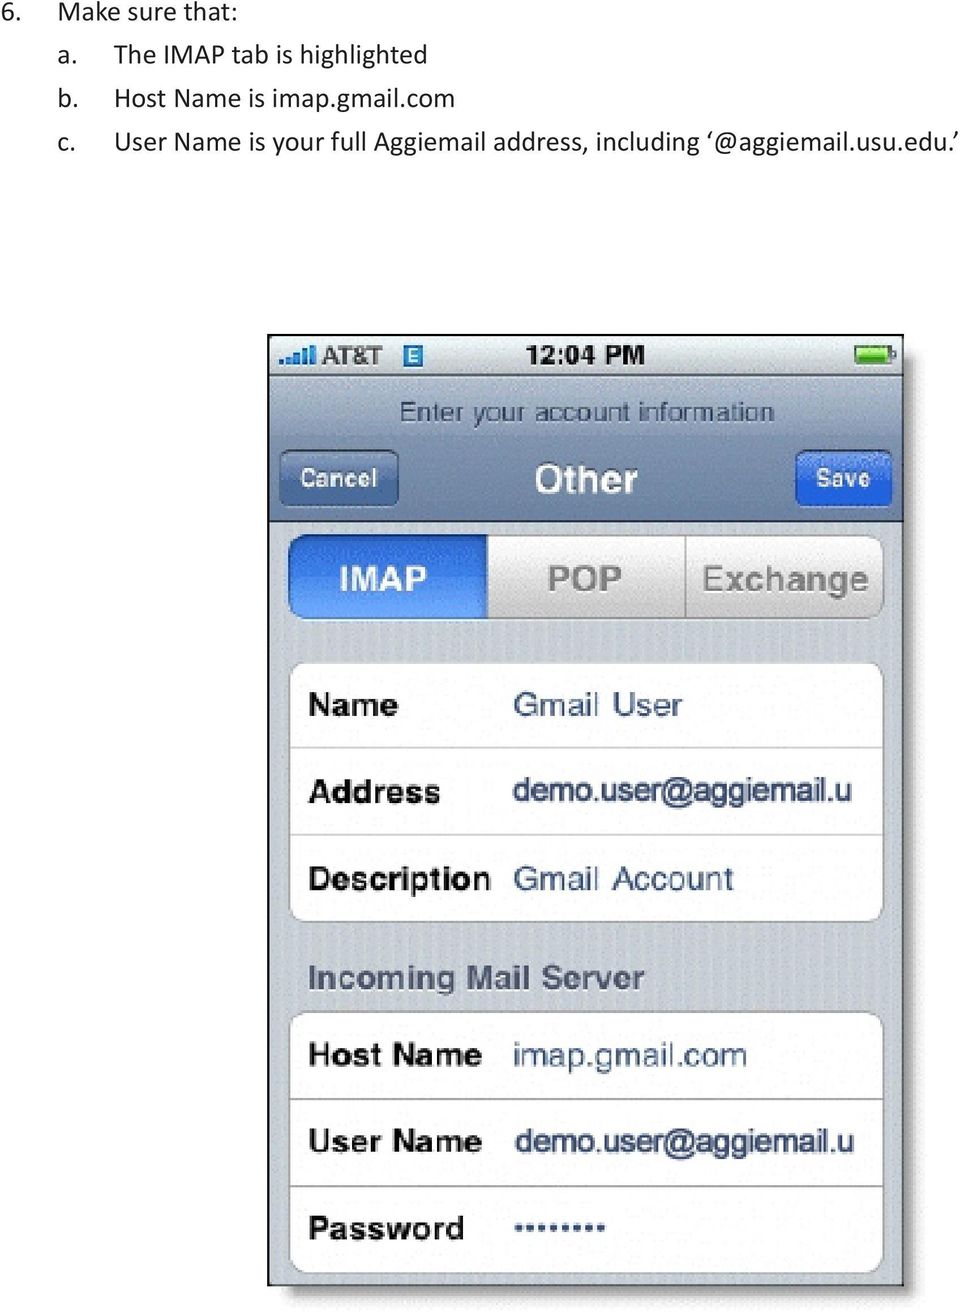 Host Name is imap.gmail.com c.